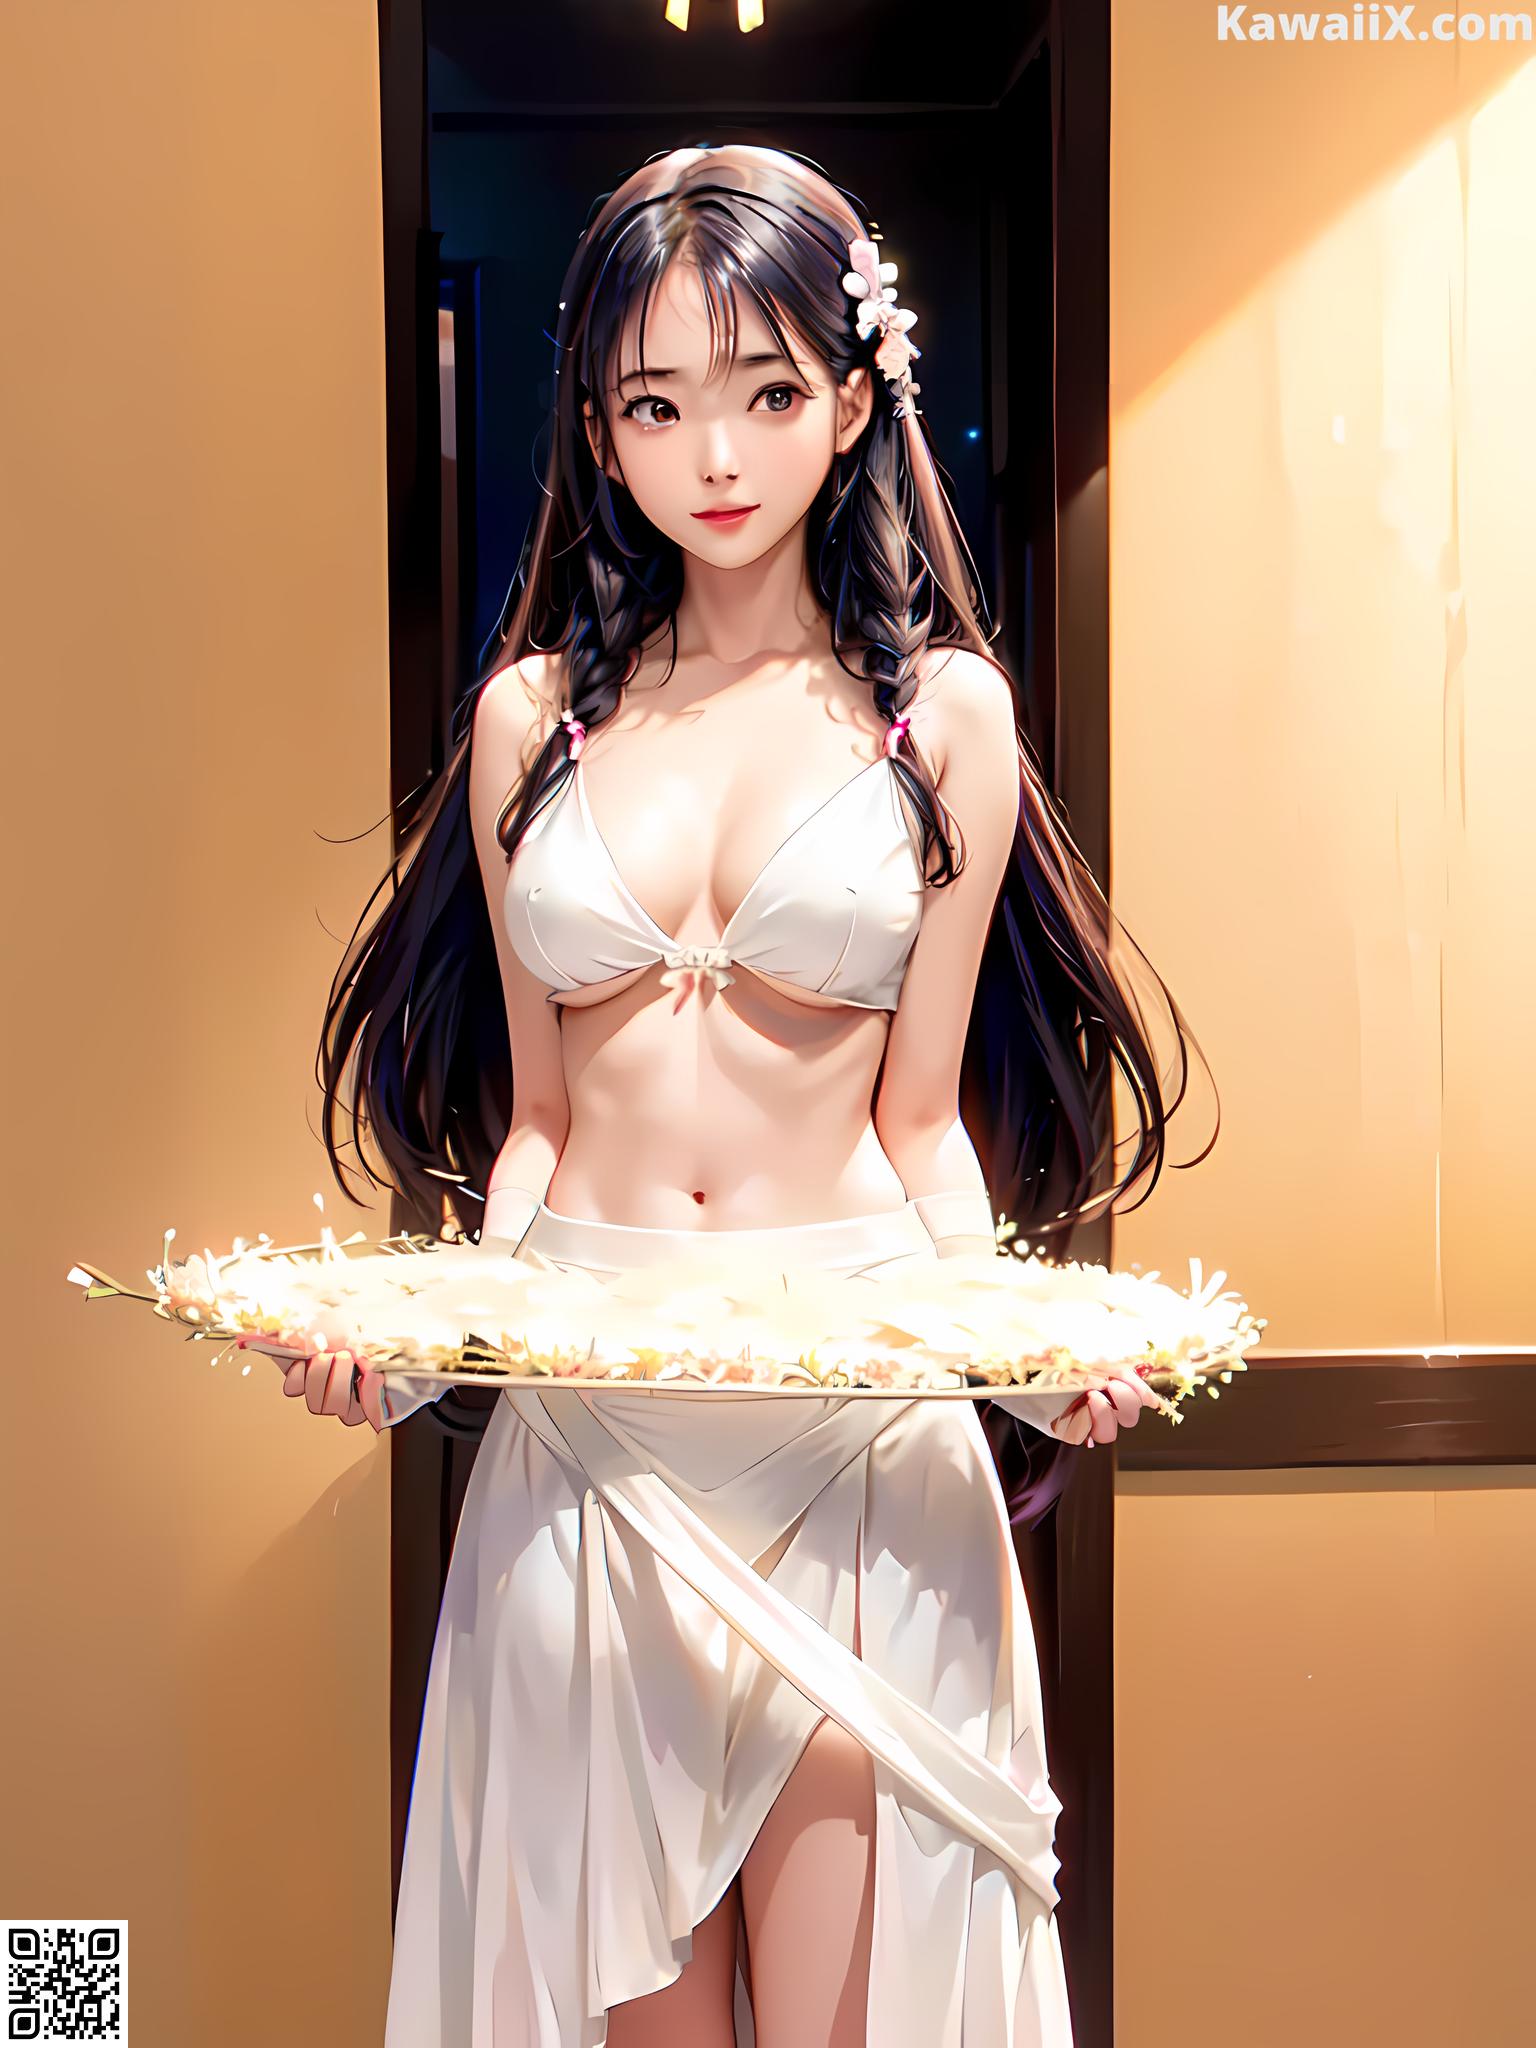 Sexy 3D Hentai - 夏日依梦 Set 1 20230609 Part 41 - ArtXGirl.com